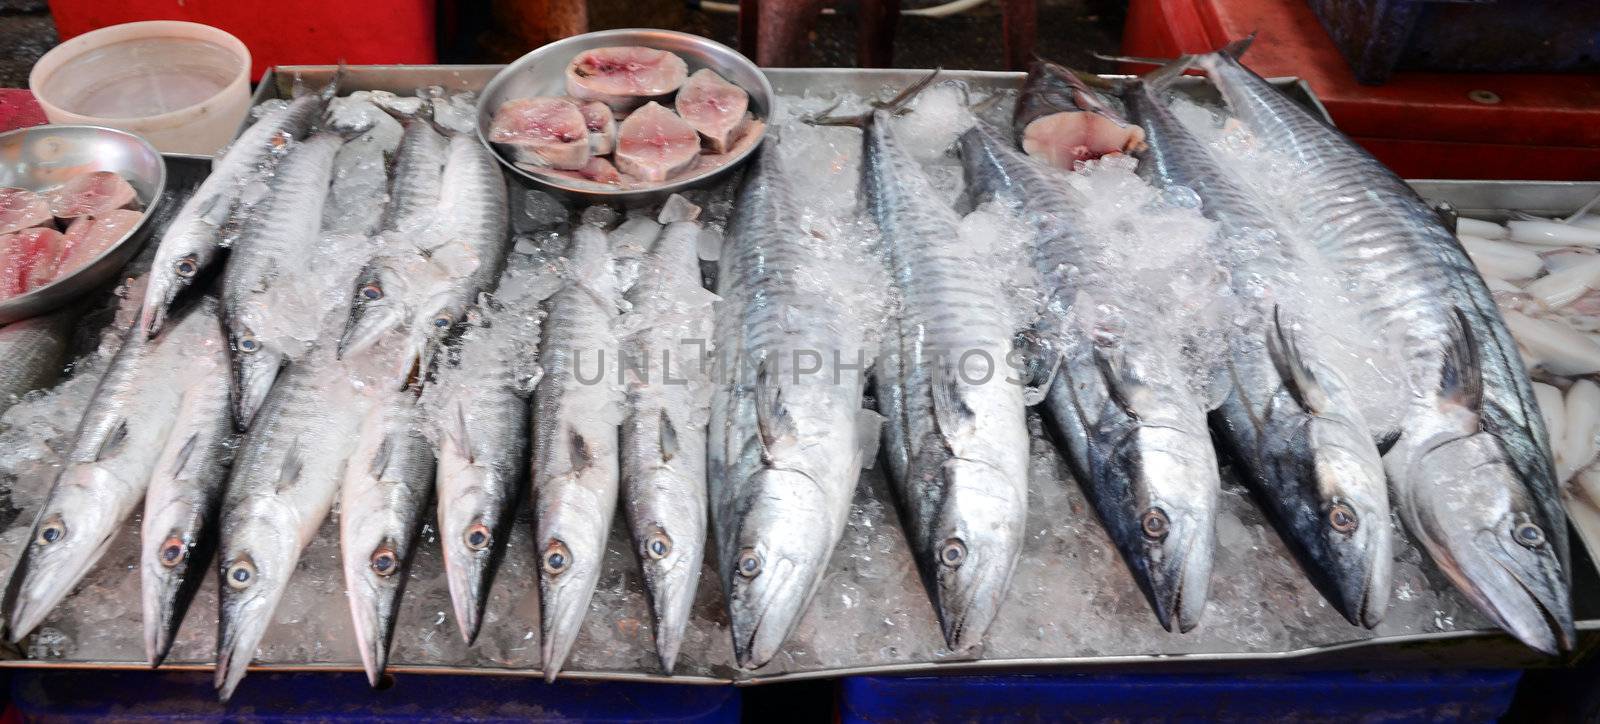 Variety of fresh fish seafood in market, chonburi, thailand